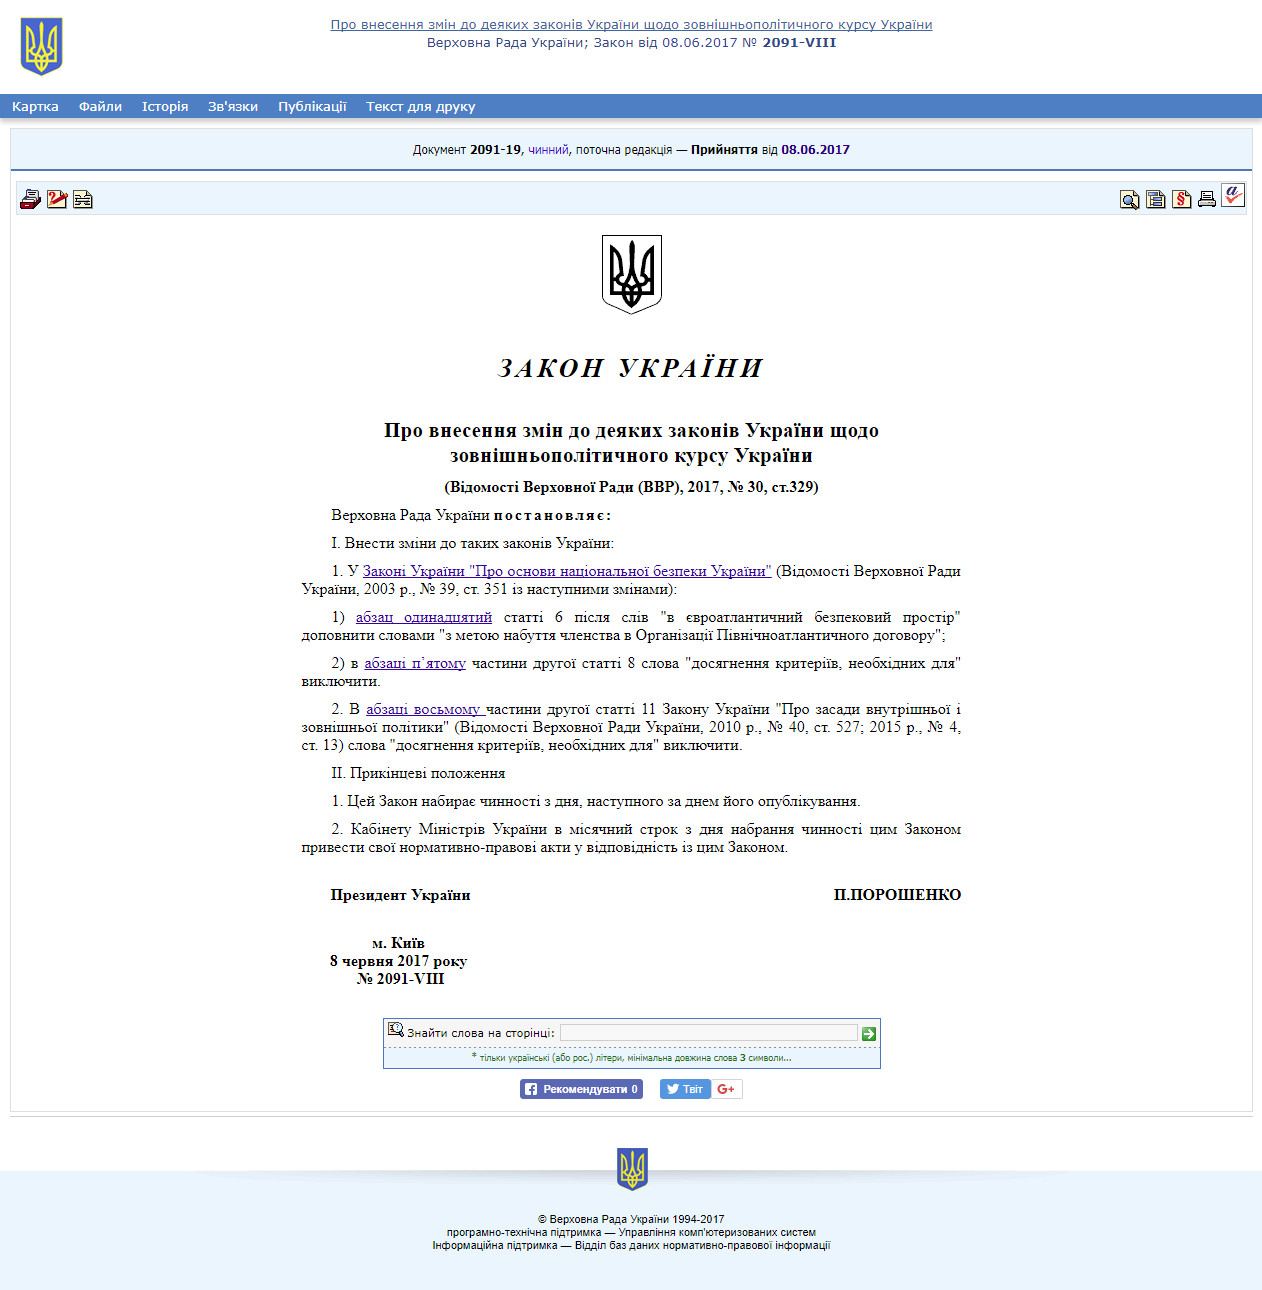 http://zakon2.rada.gov.ua/laws/show/2091-19/paran6#n6